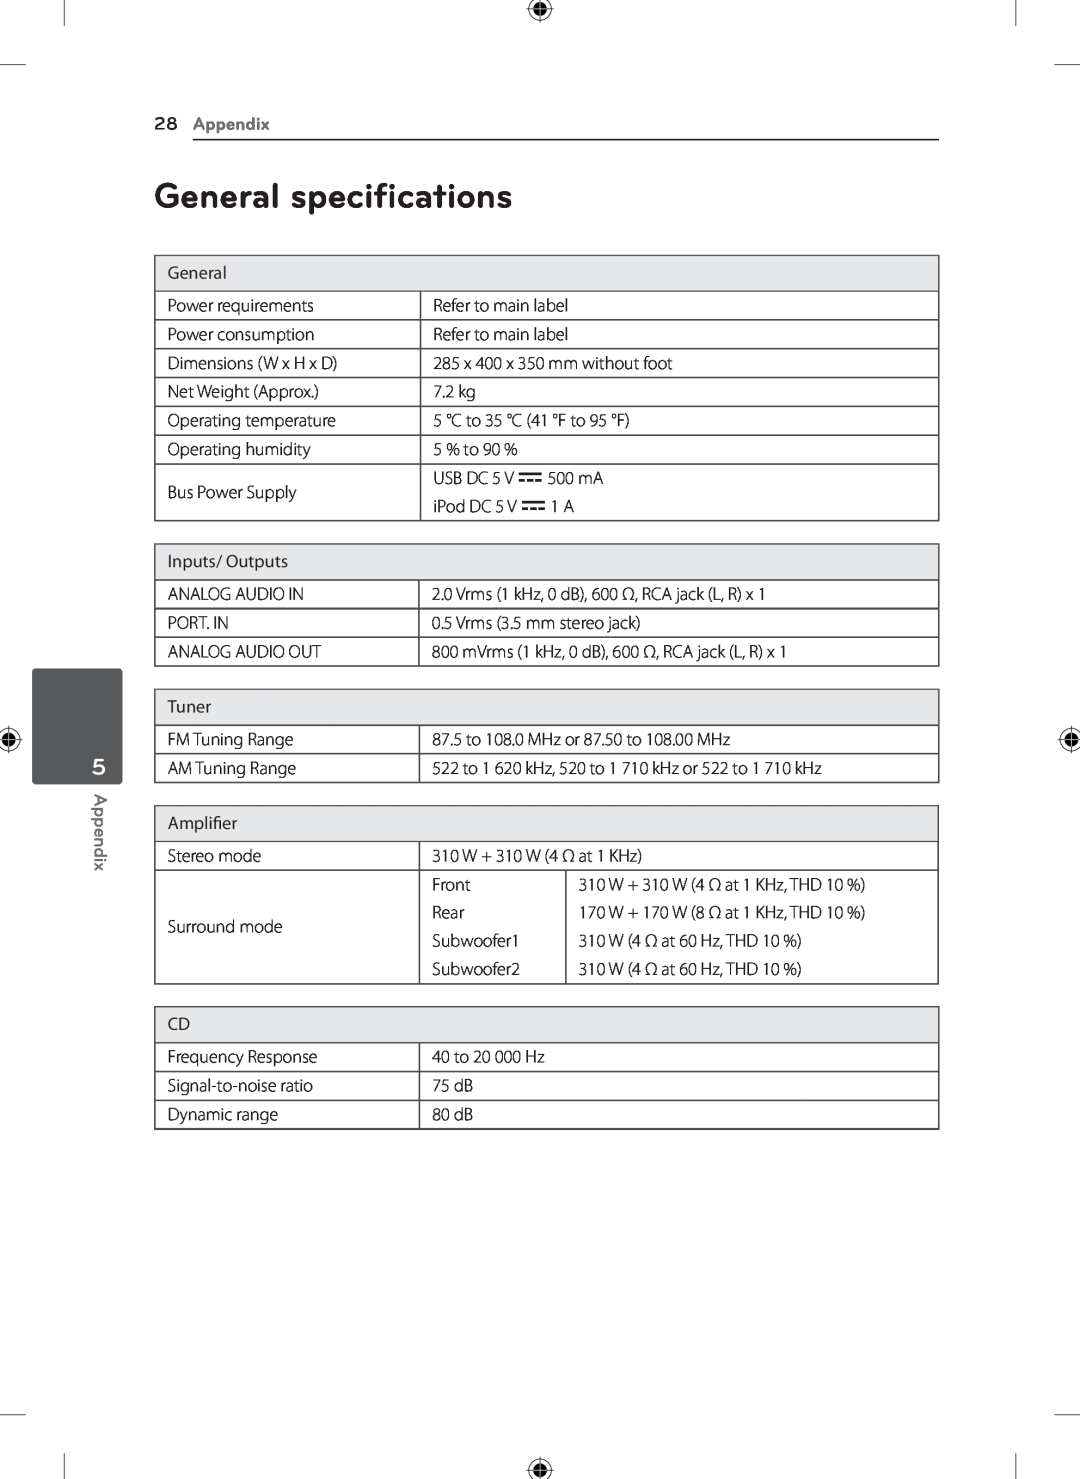 LG Electronics KSM1506 owner manual General speciﬁcations, 28Appendix 